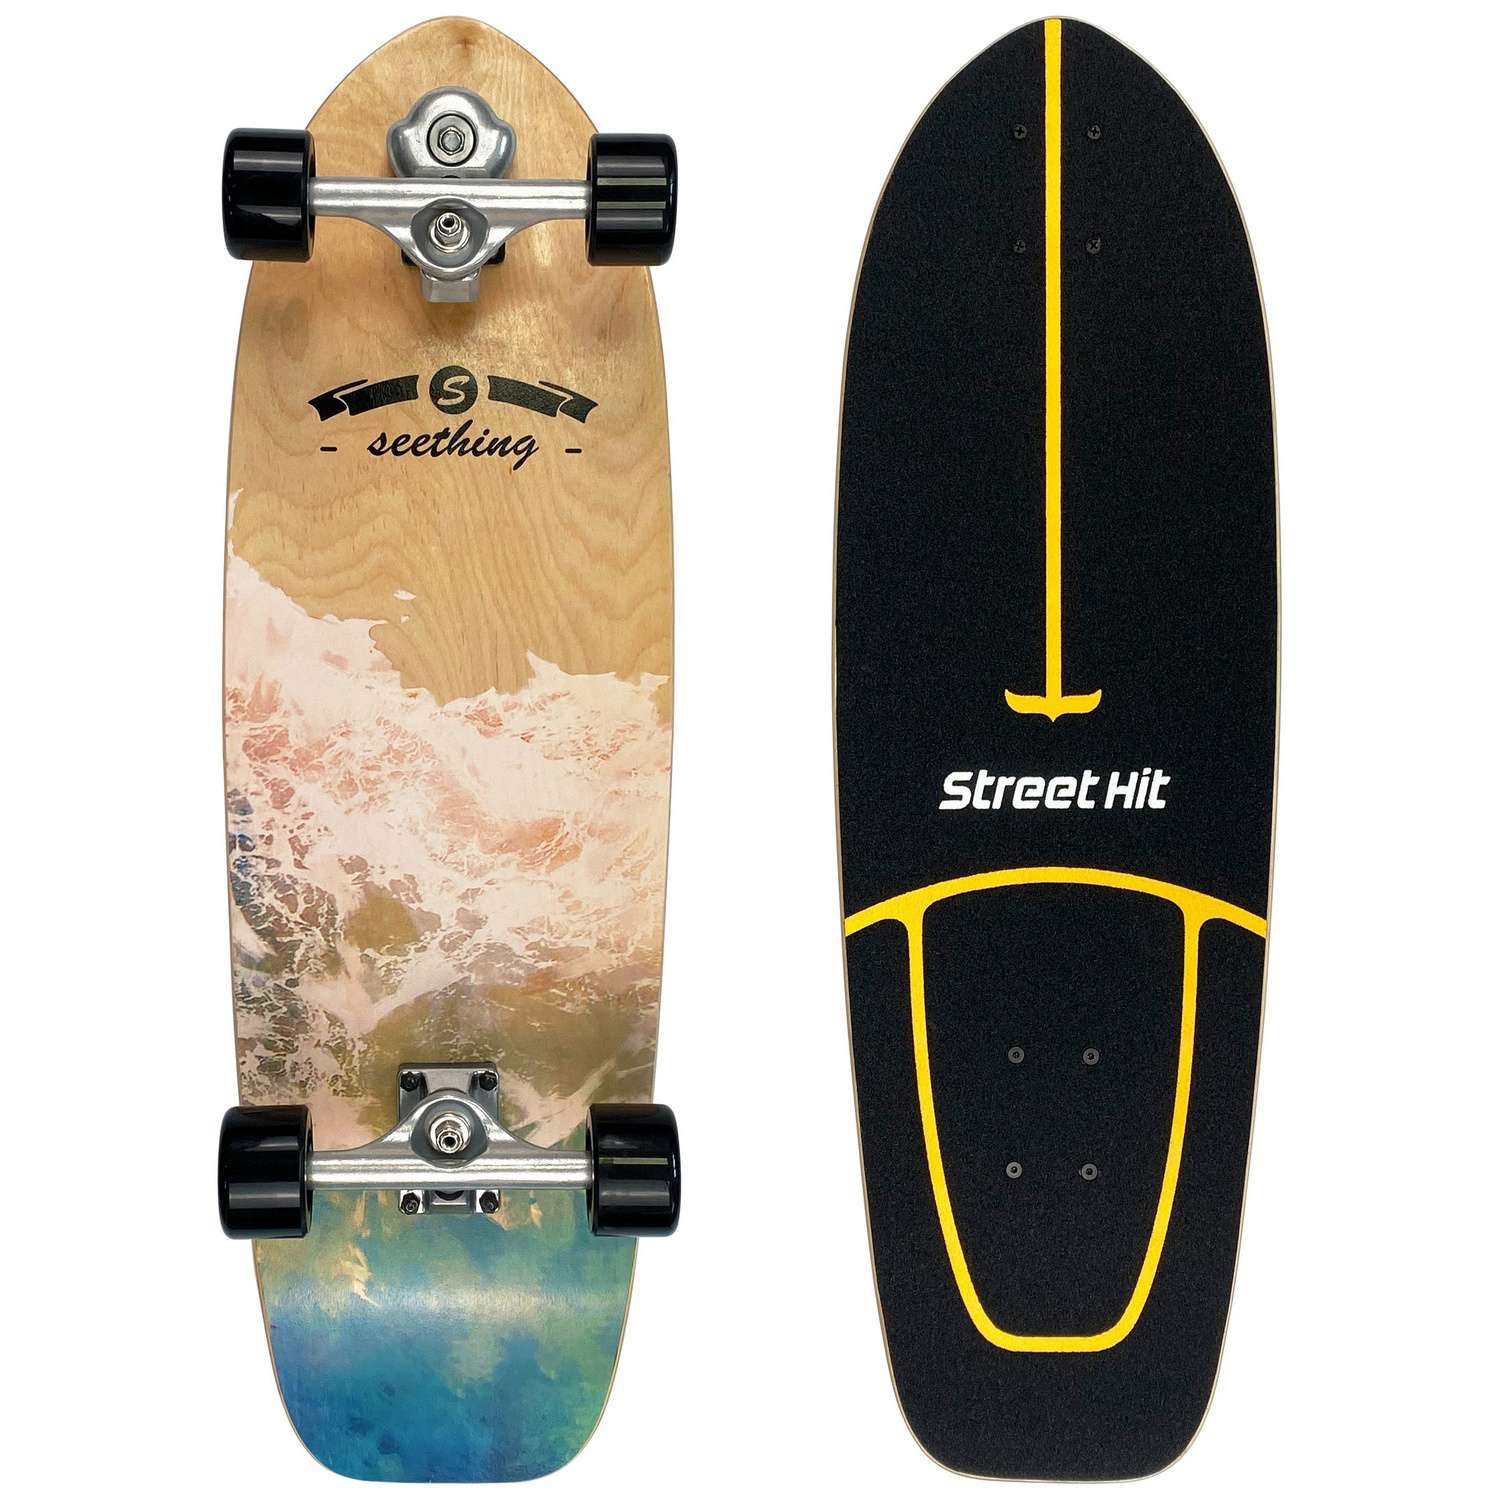 Скейтборд Street Hit деревянный SurfSkate SEETHING-1 - фото 2